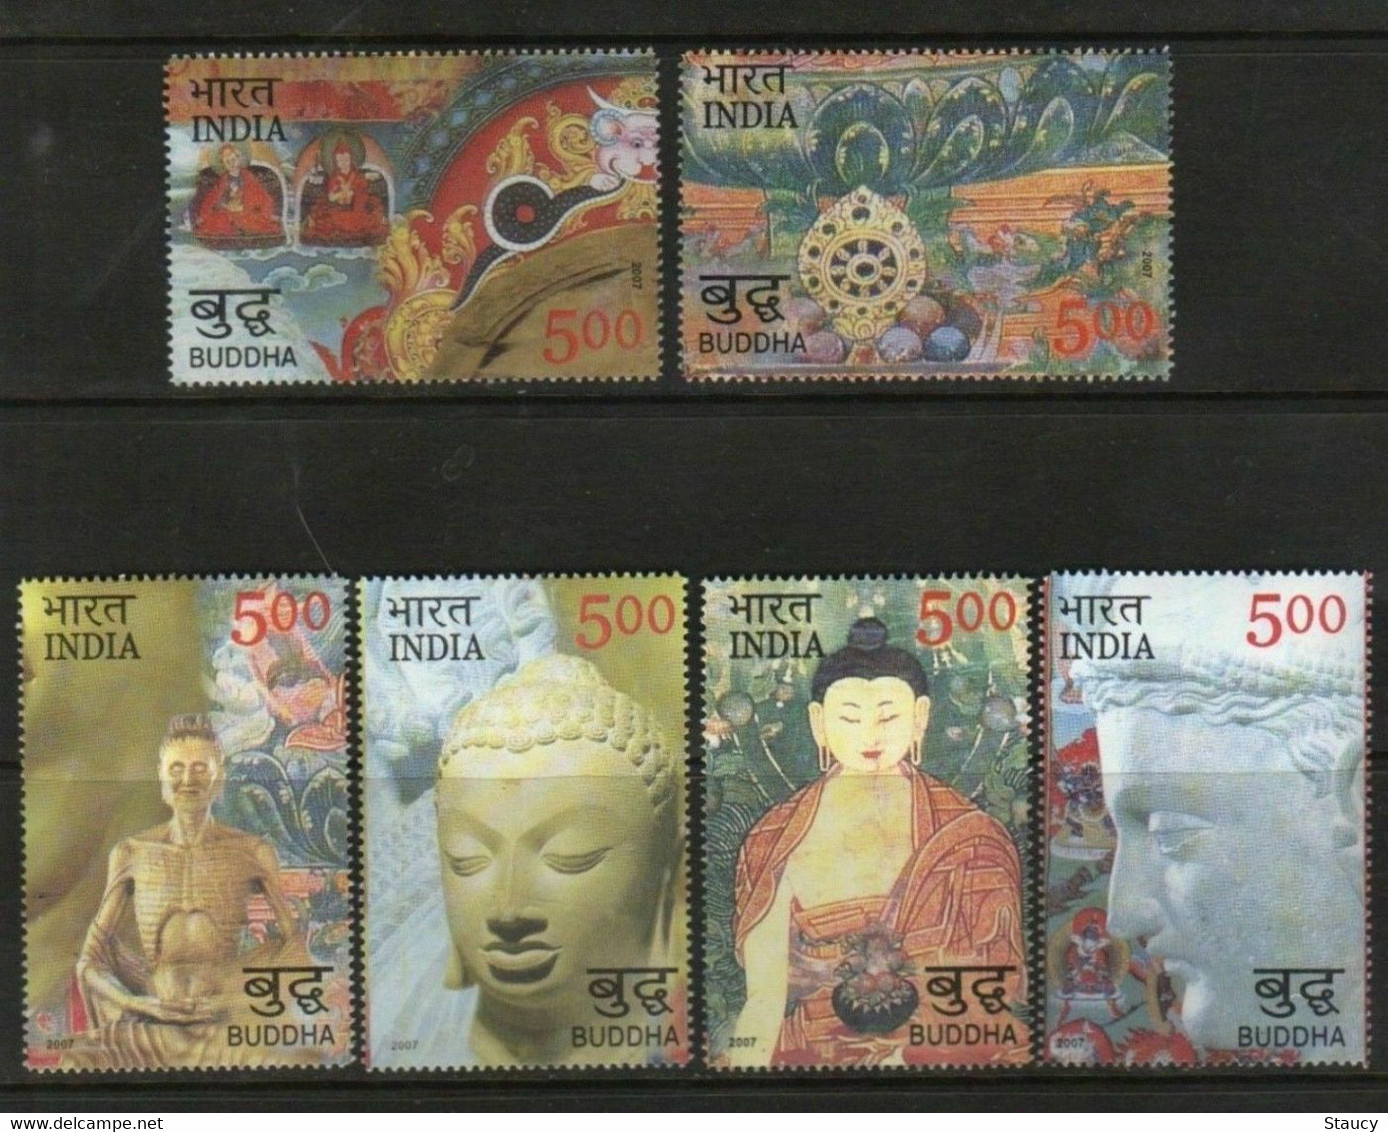 INDIA 2007 2550 YEARS OF MAHAPARINIRVANA OF THE BUDDHA 6v SET MNH, P.O Fresh & Fine - Grabados